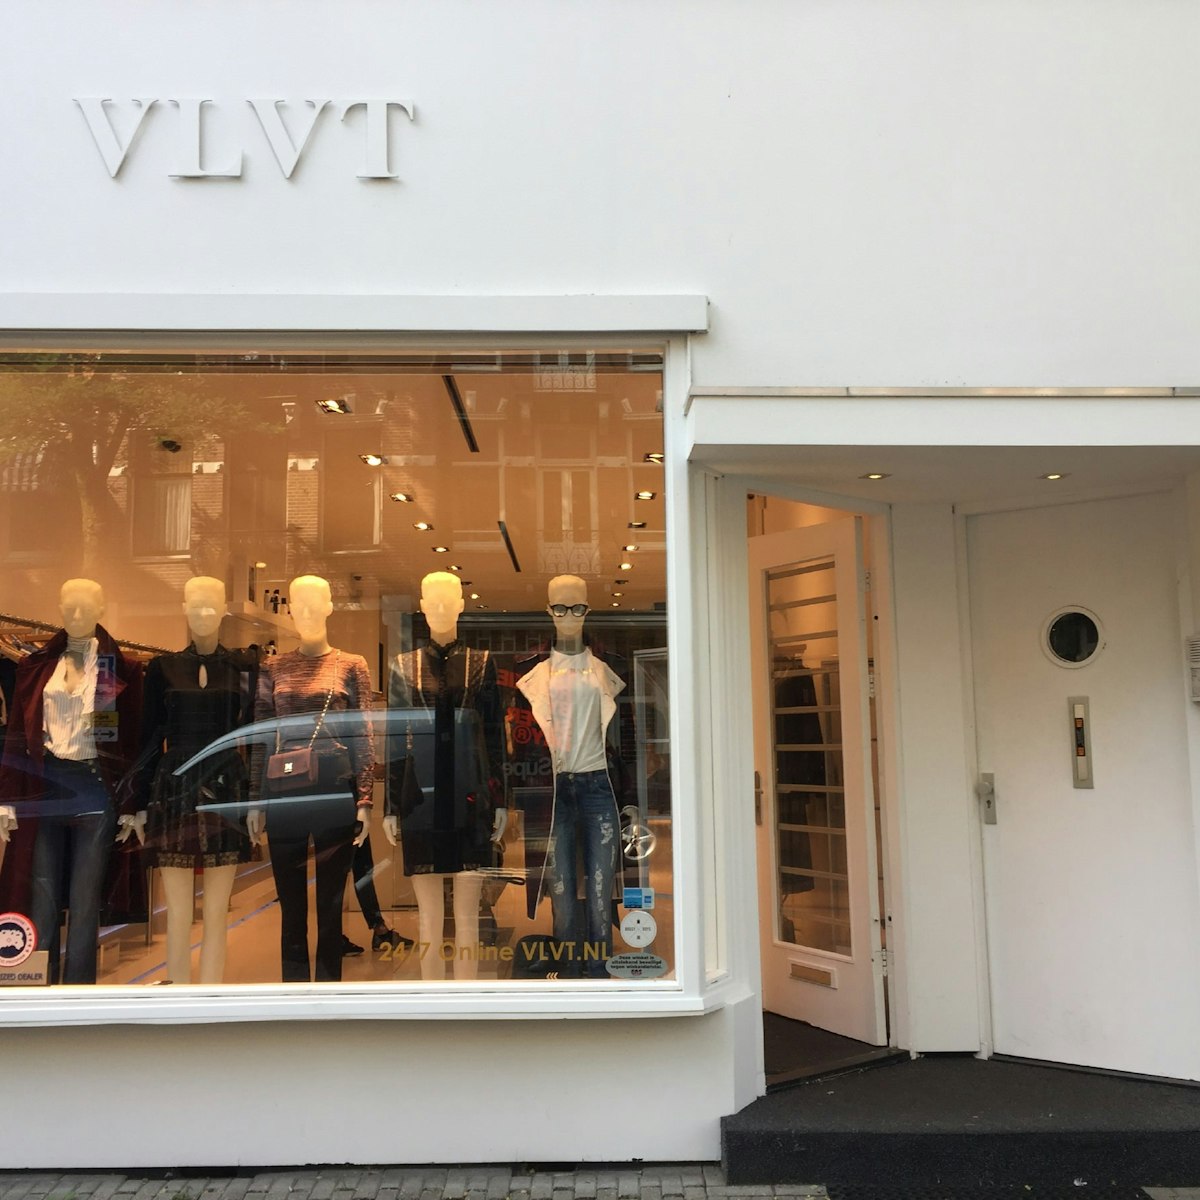 VLVT specialise in Dutch-designed clothing for women